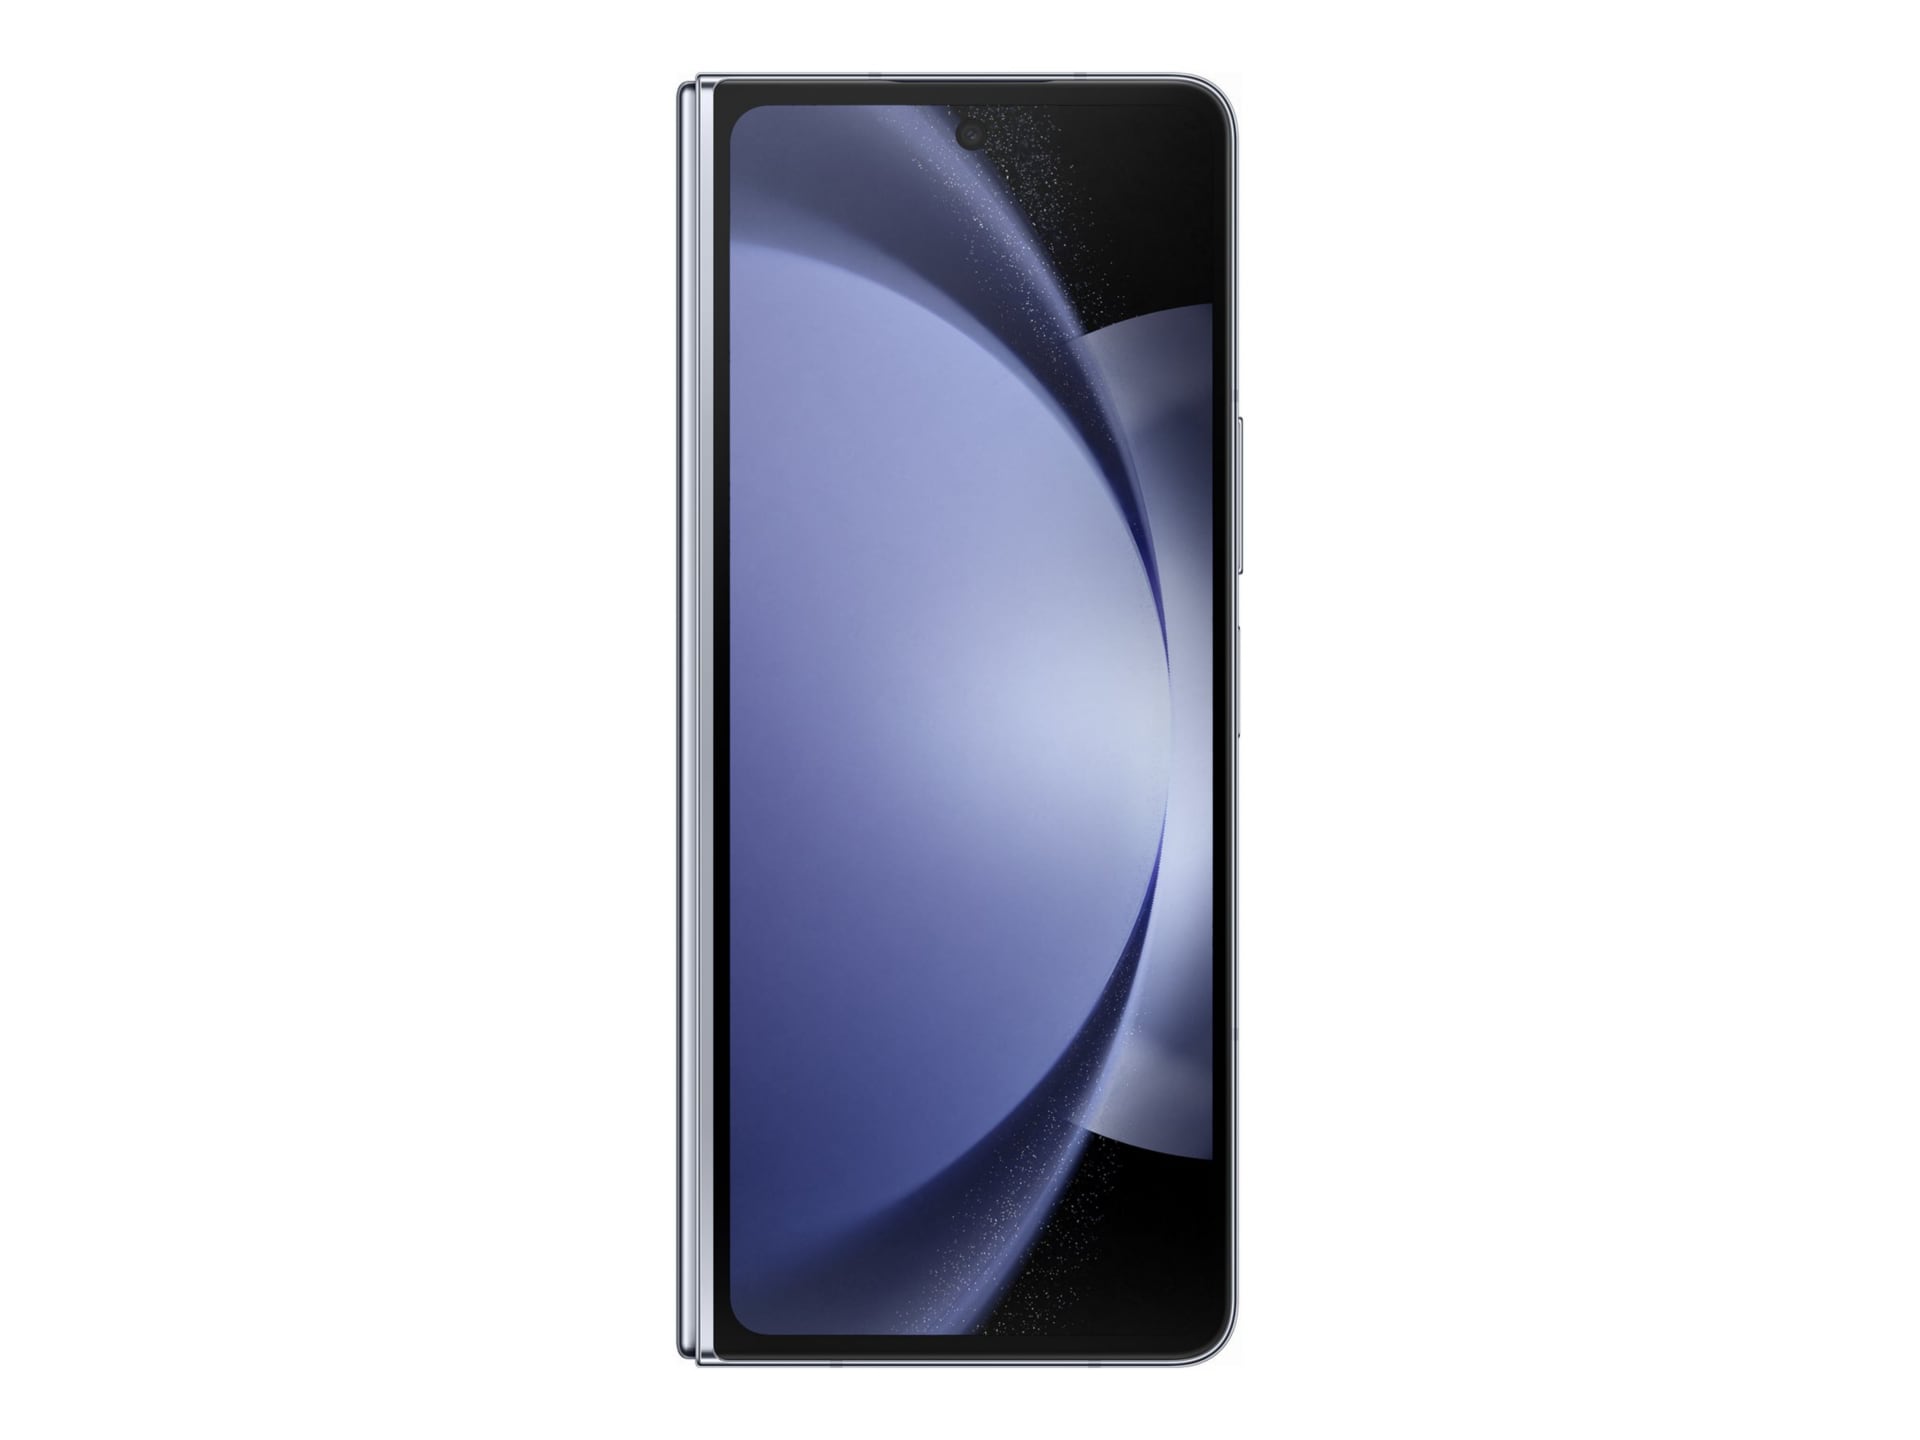 Samsung Galaxy Z Fold5 - bleu glacé - 5G smartphone - 512 Go - GSM